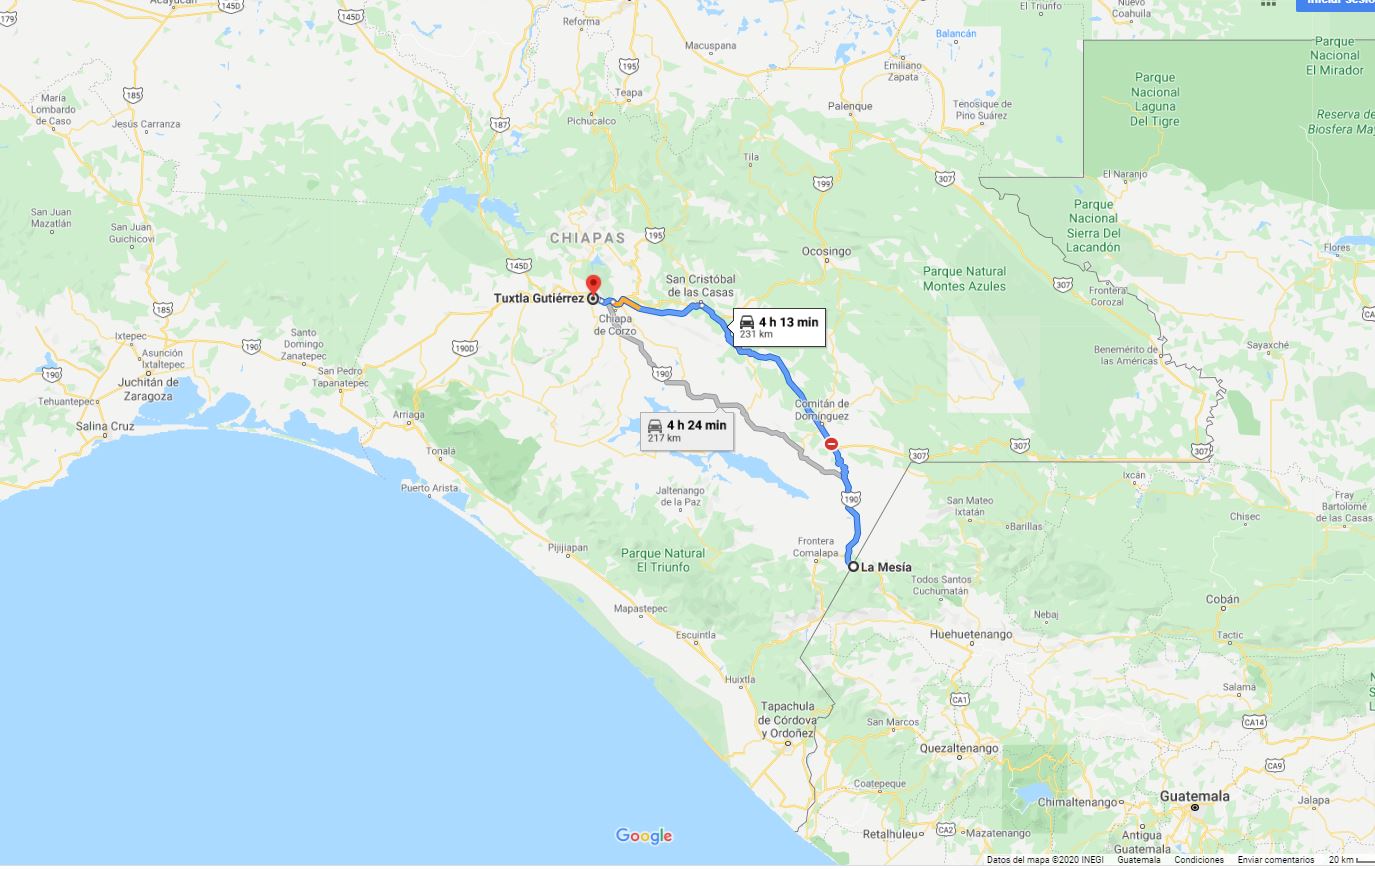 Tuxtla Gutiérrez se encuentra a 231 km de Mesía, frontera con Guatemala en Huehuetenango. (Imagen: Google Maps)